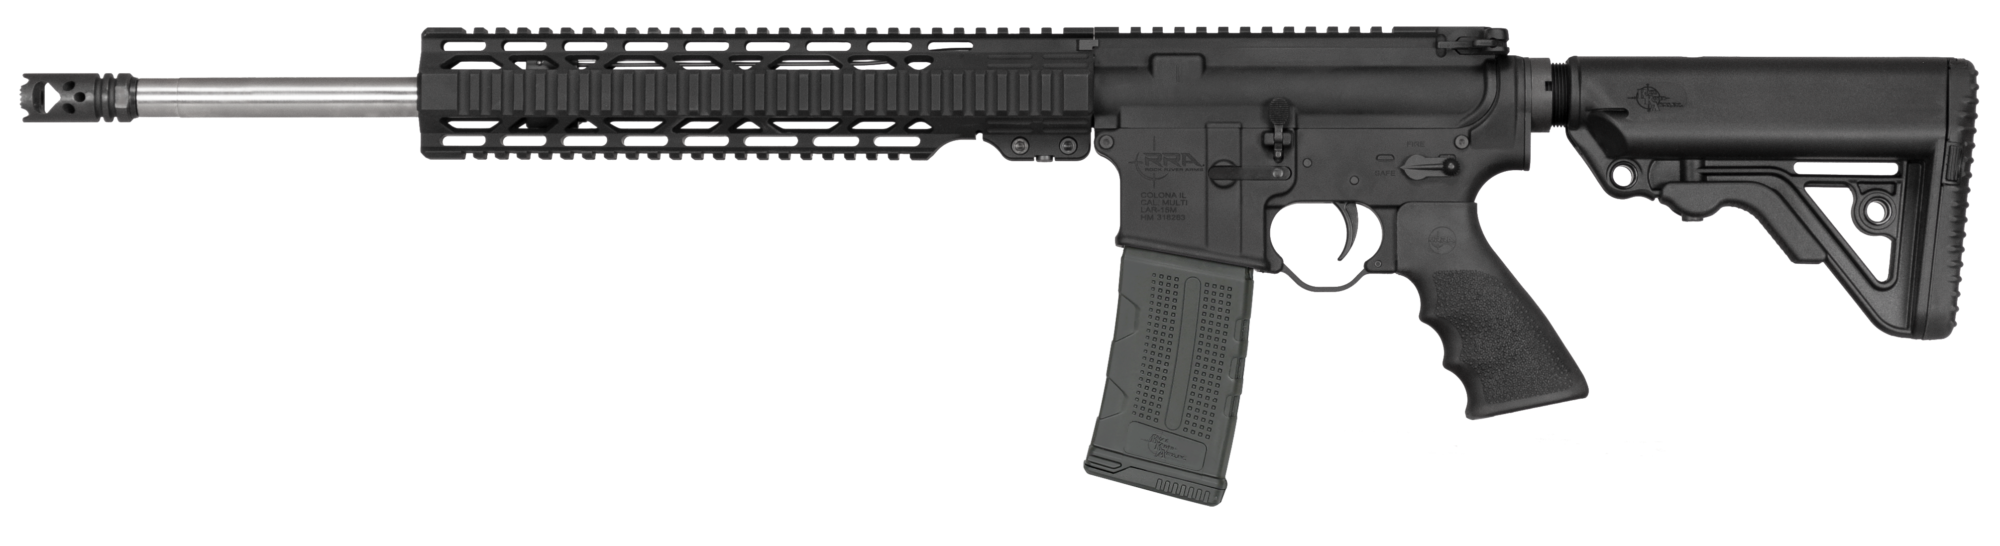 Rock River Arms AR-15